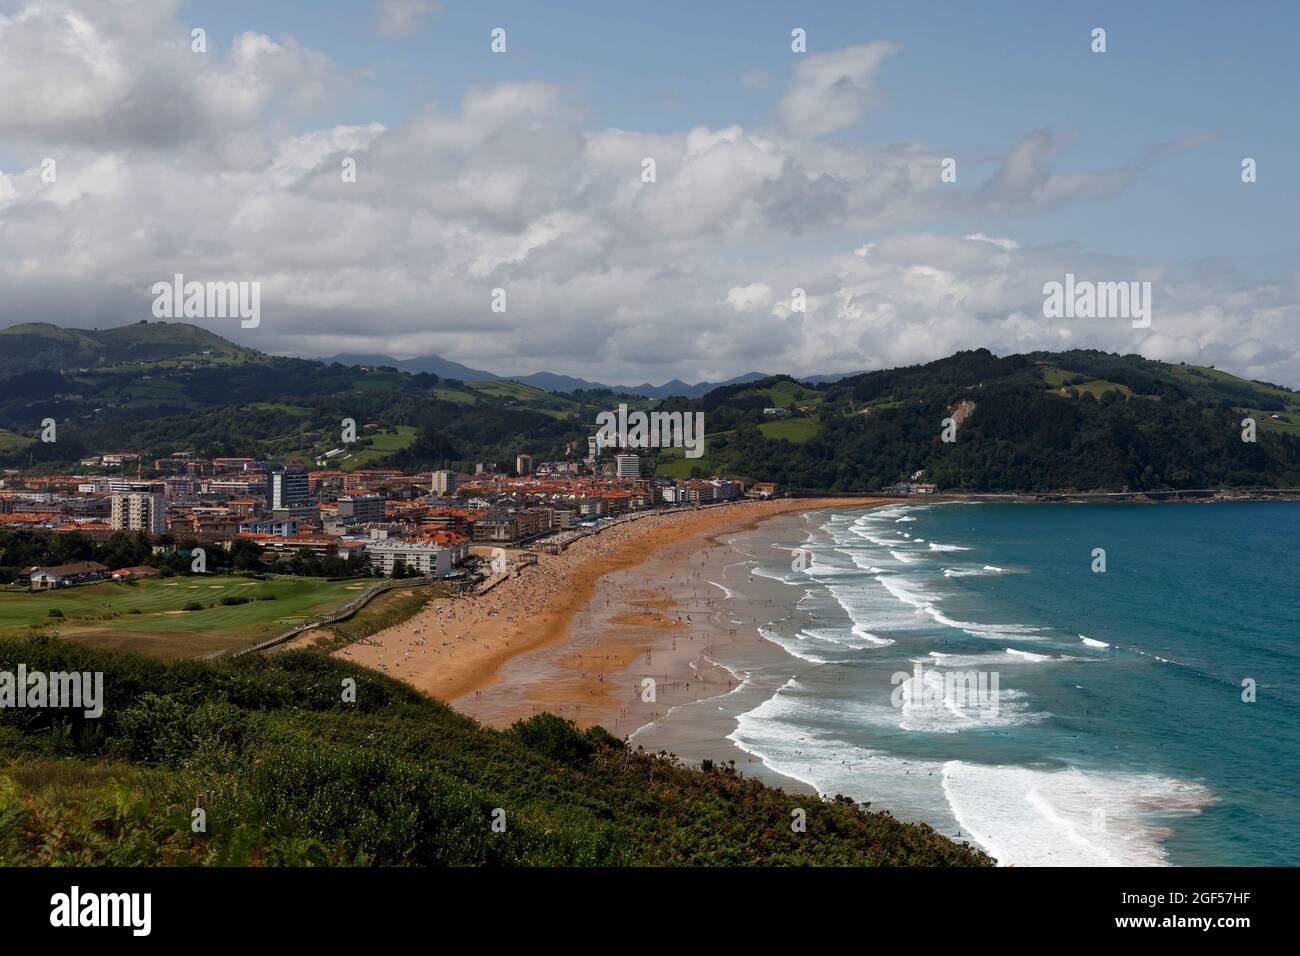 Spain, Gipuzkoa, Zarautz, Clouds over coastal town with splashing waves in foreground Stock Photo